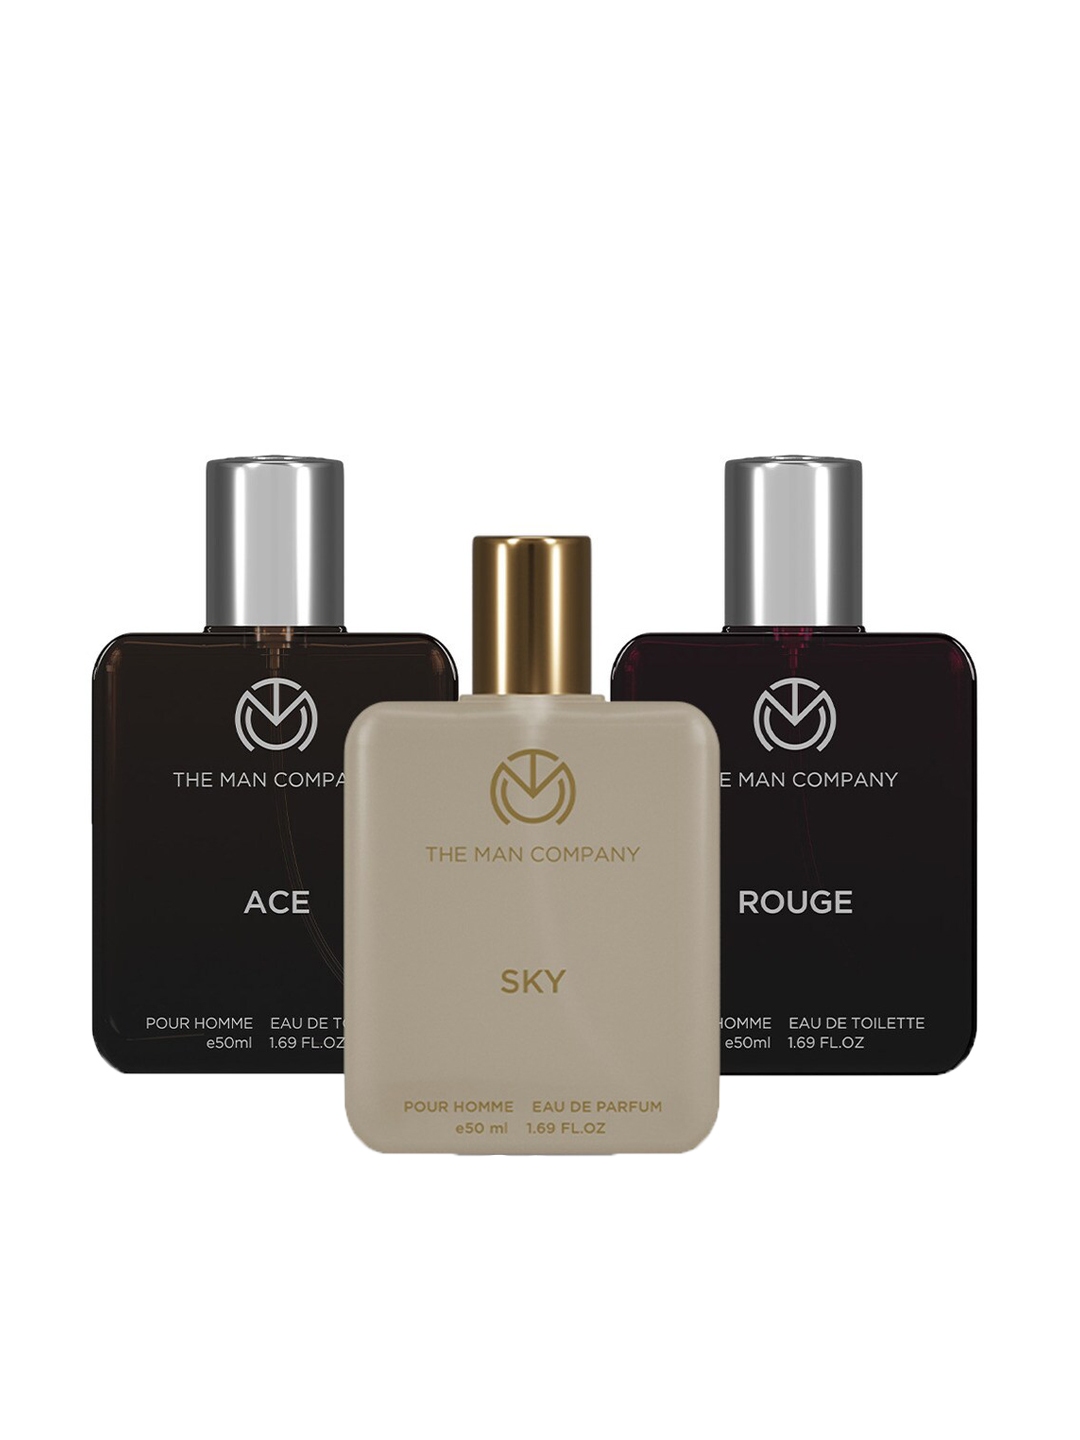 THE MAN COMPANY Set Of 3 Luxury Perfume EDP- Sky - Ace -Rogue - 50ml Each